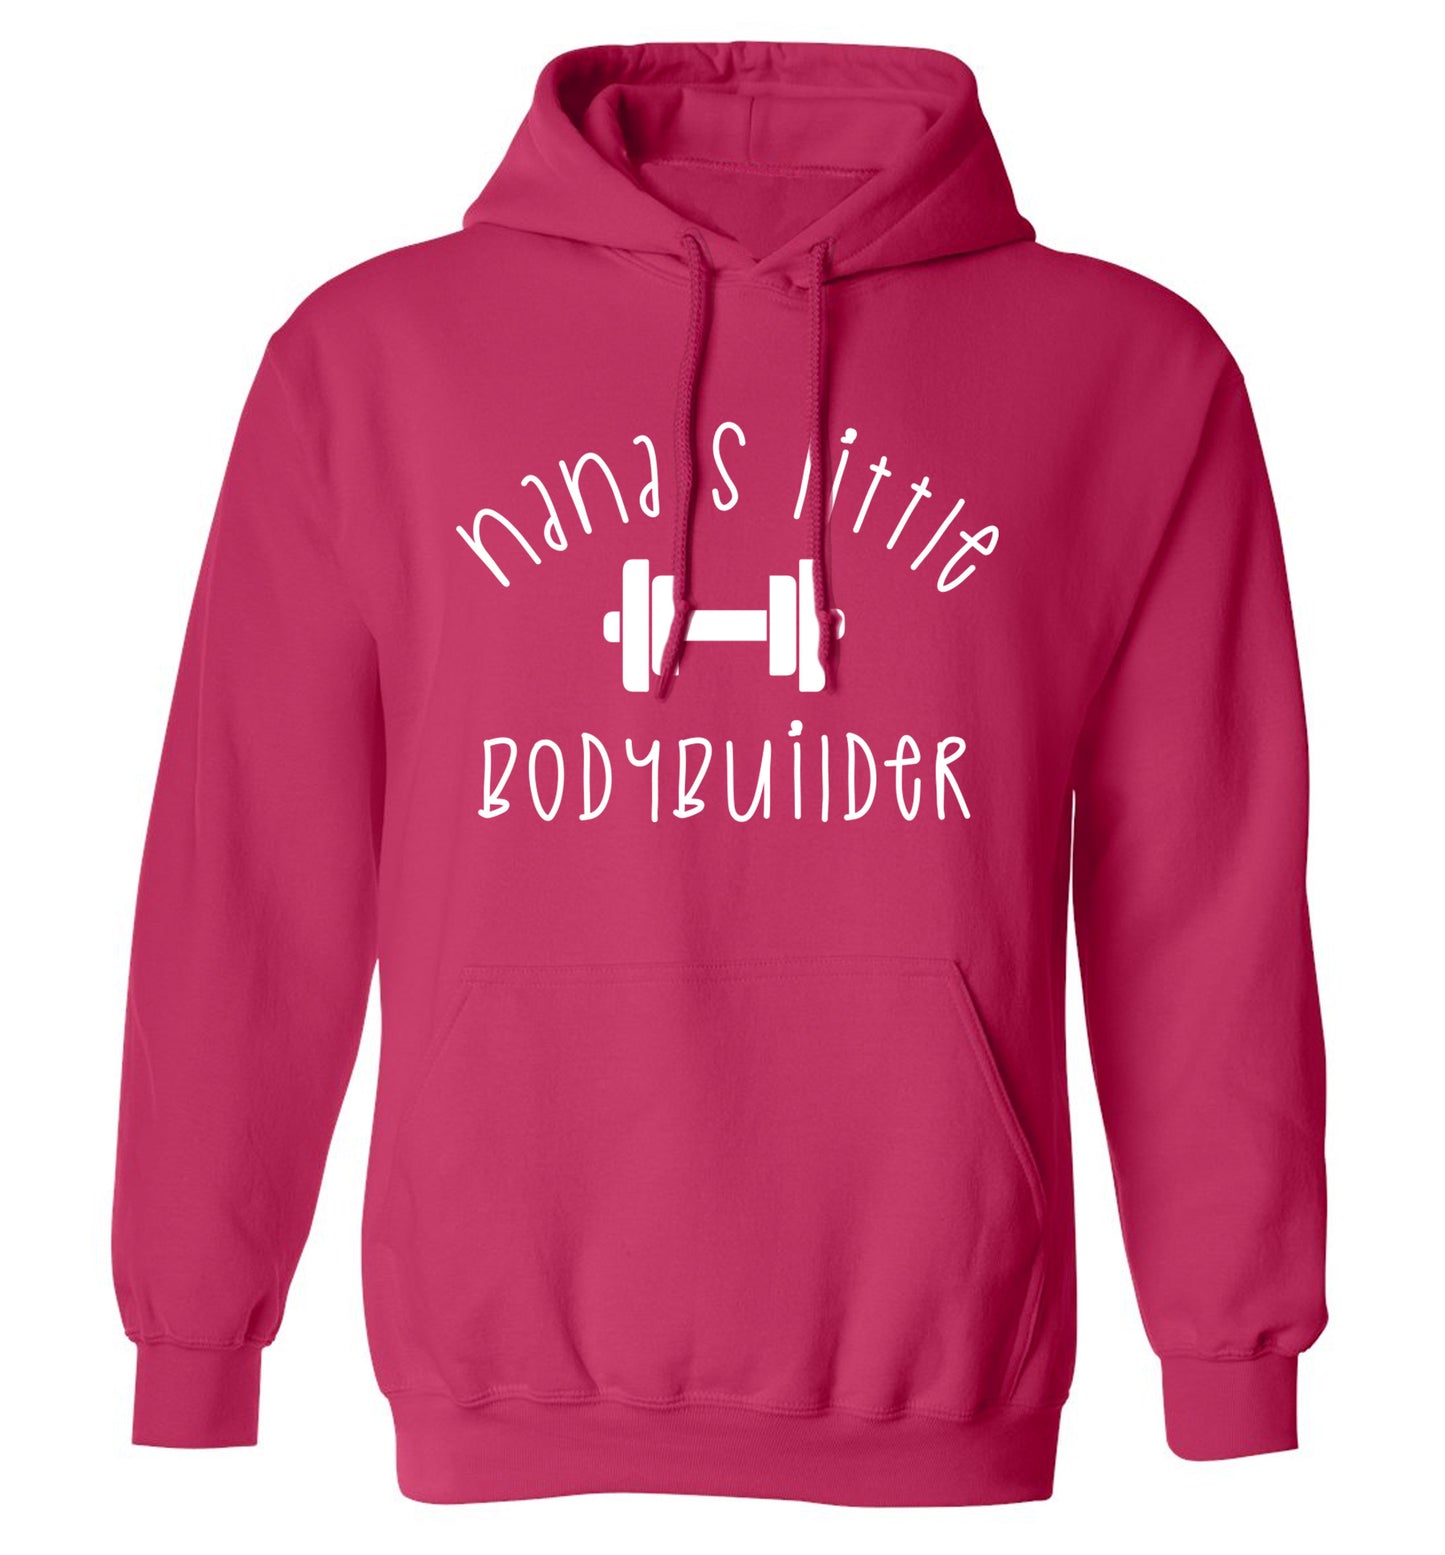 Nana's little bodybuilder adults unisex pink hoodie 2XL